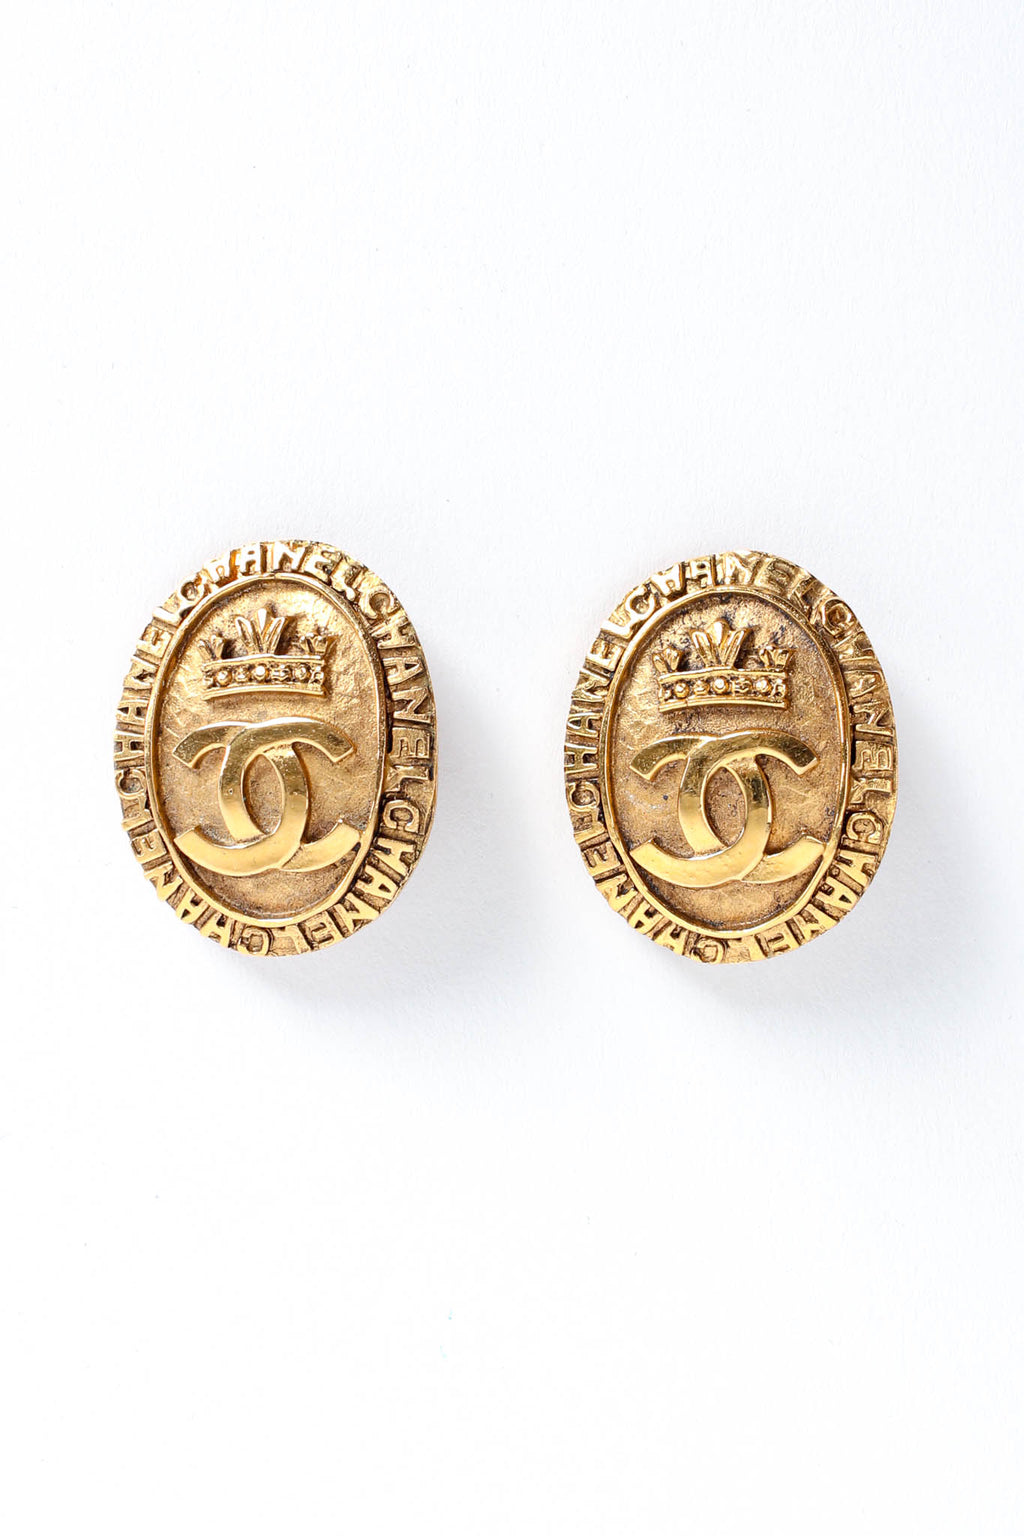 CC logo vintage earrings. Website search for X52088 #sheerroom